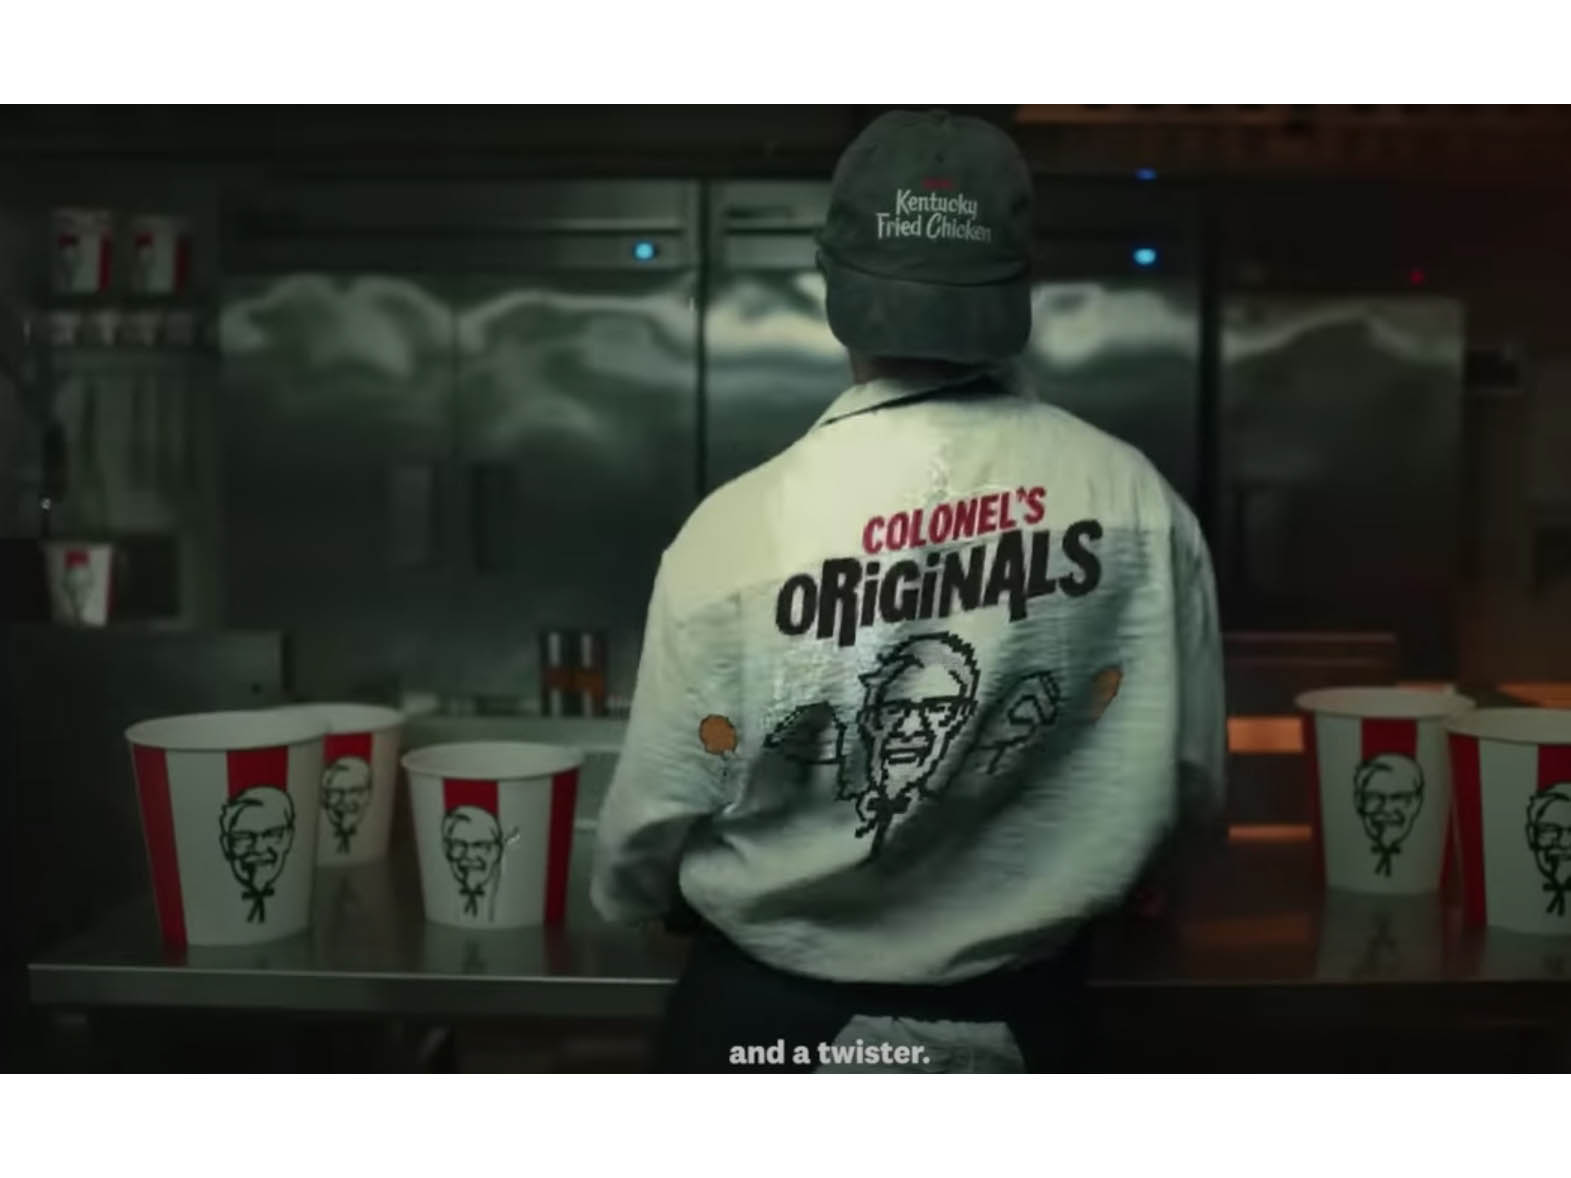 New disruptive campaign for KFC Arabia taps into the region hip hop culture